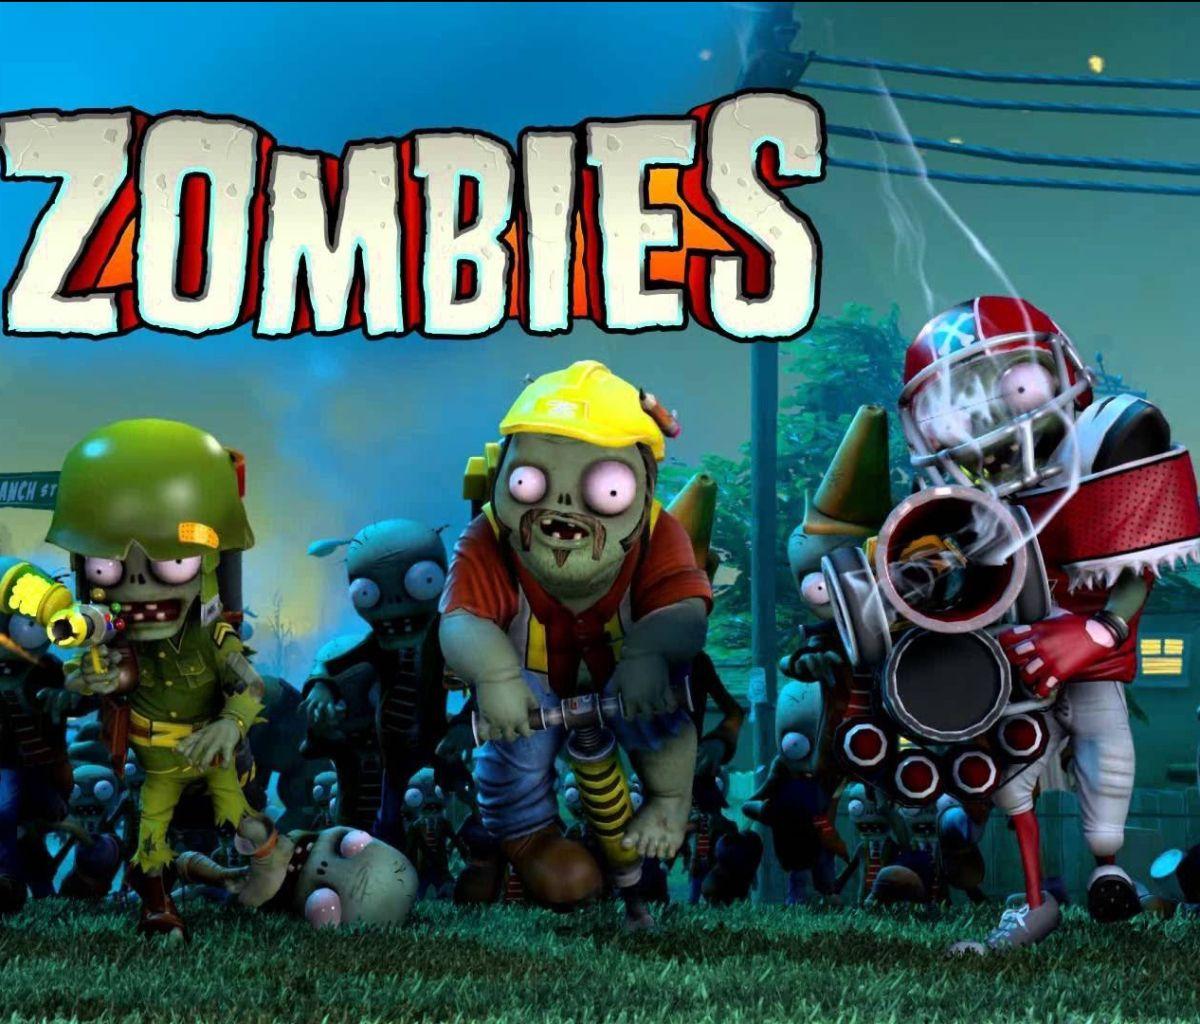 Galaxy Tab 3 7.0 Game Plants Vs. Zombies: Garden Warfare